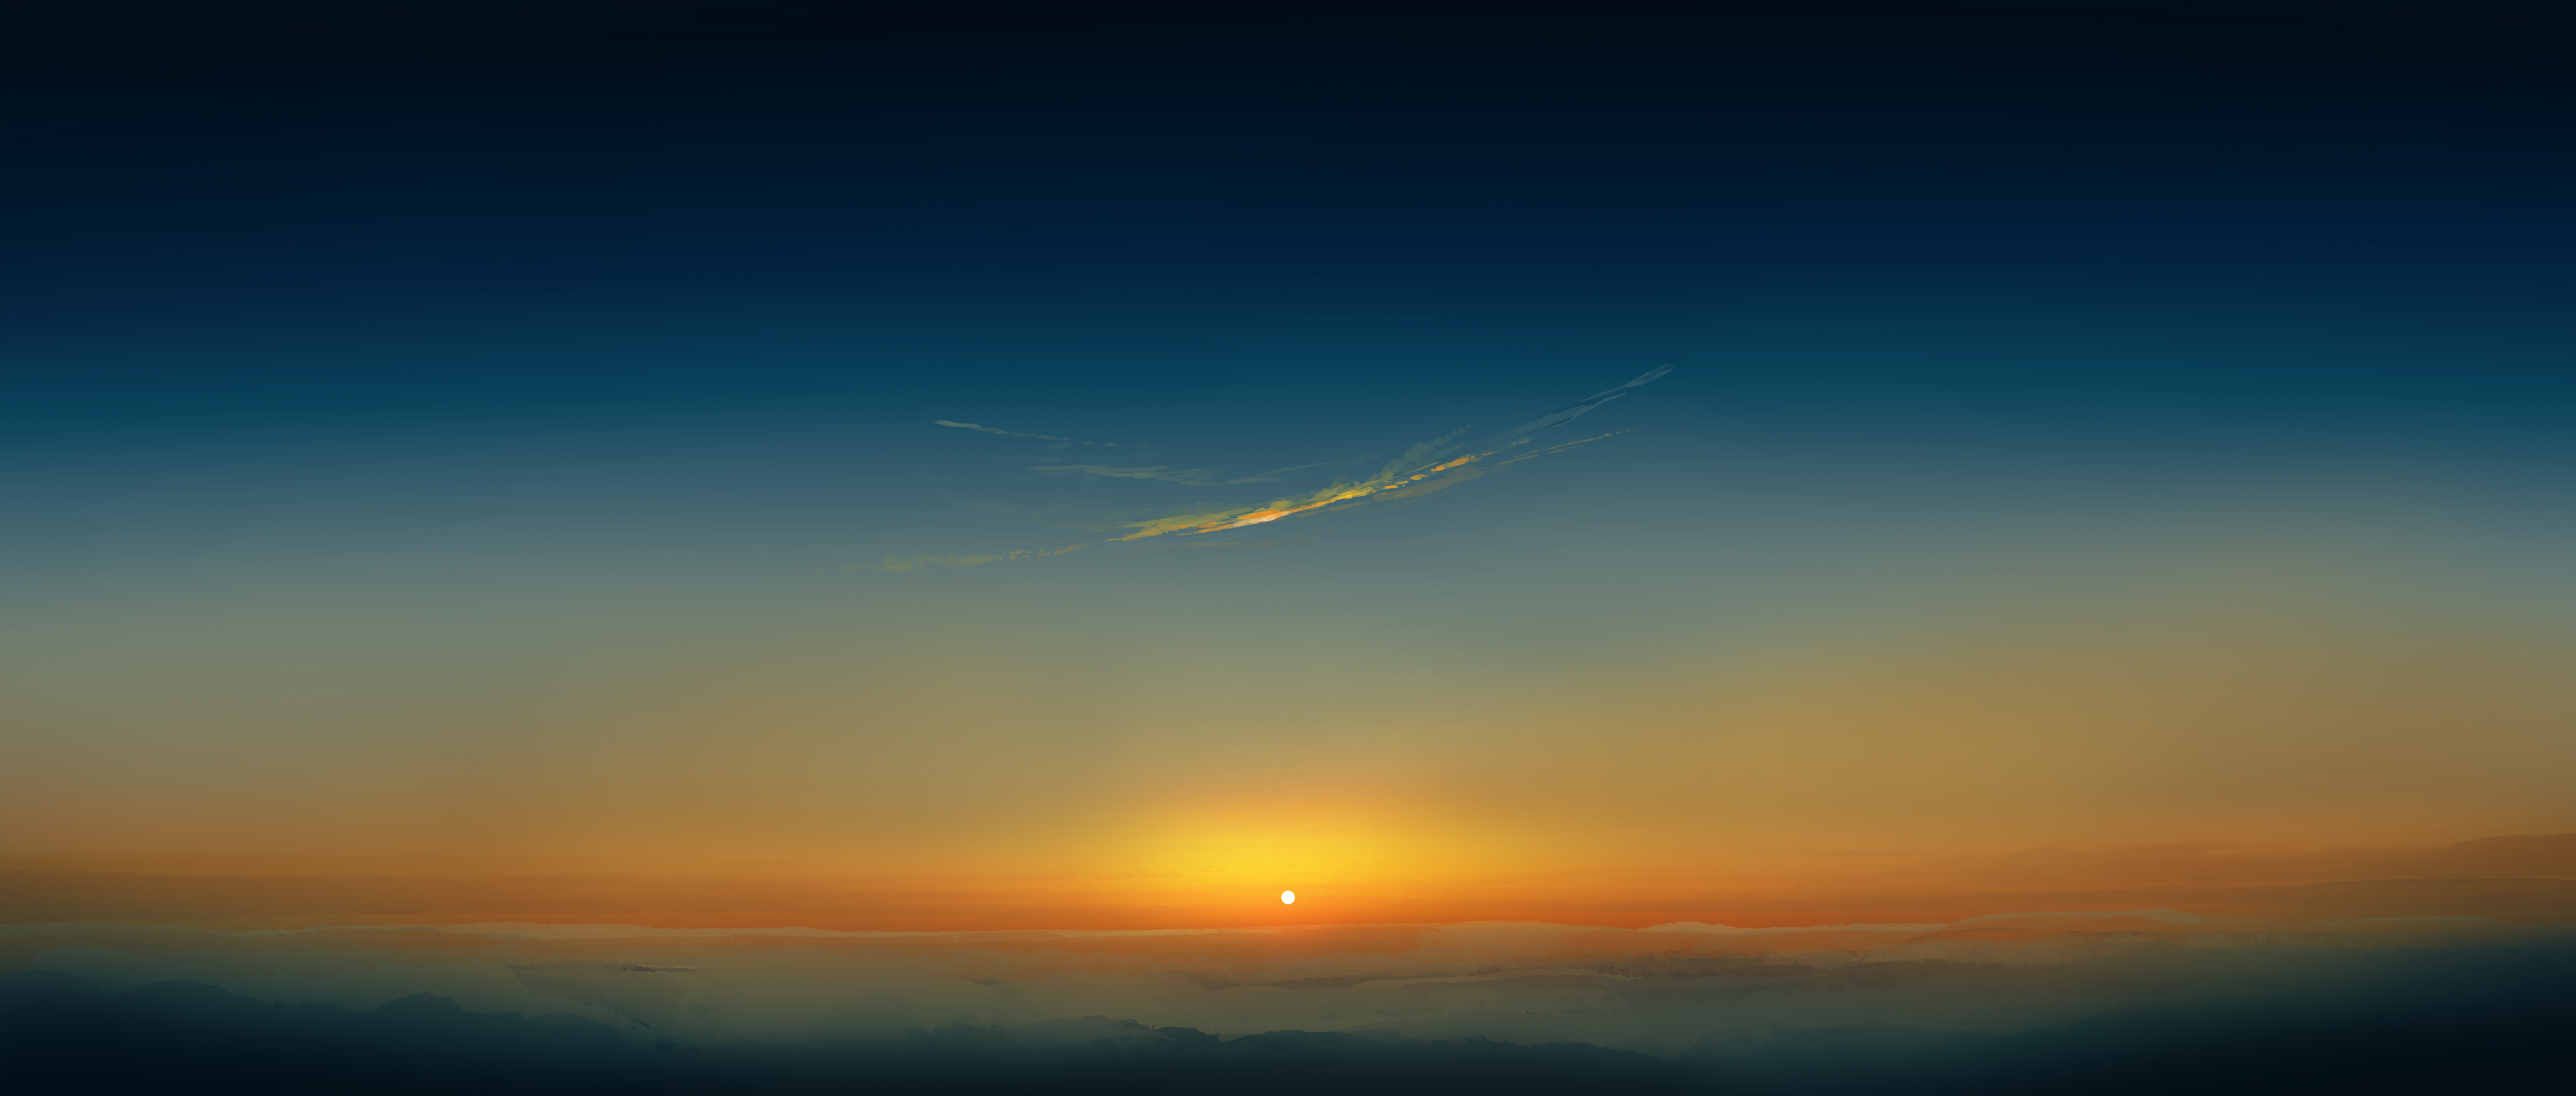 Gracile Digital Art Artwork Illustration Ultrawide Wide Screen Sunset Sky Clouds Minimalism 5640x2400